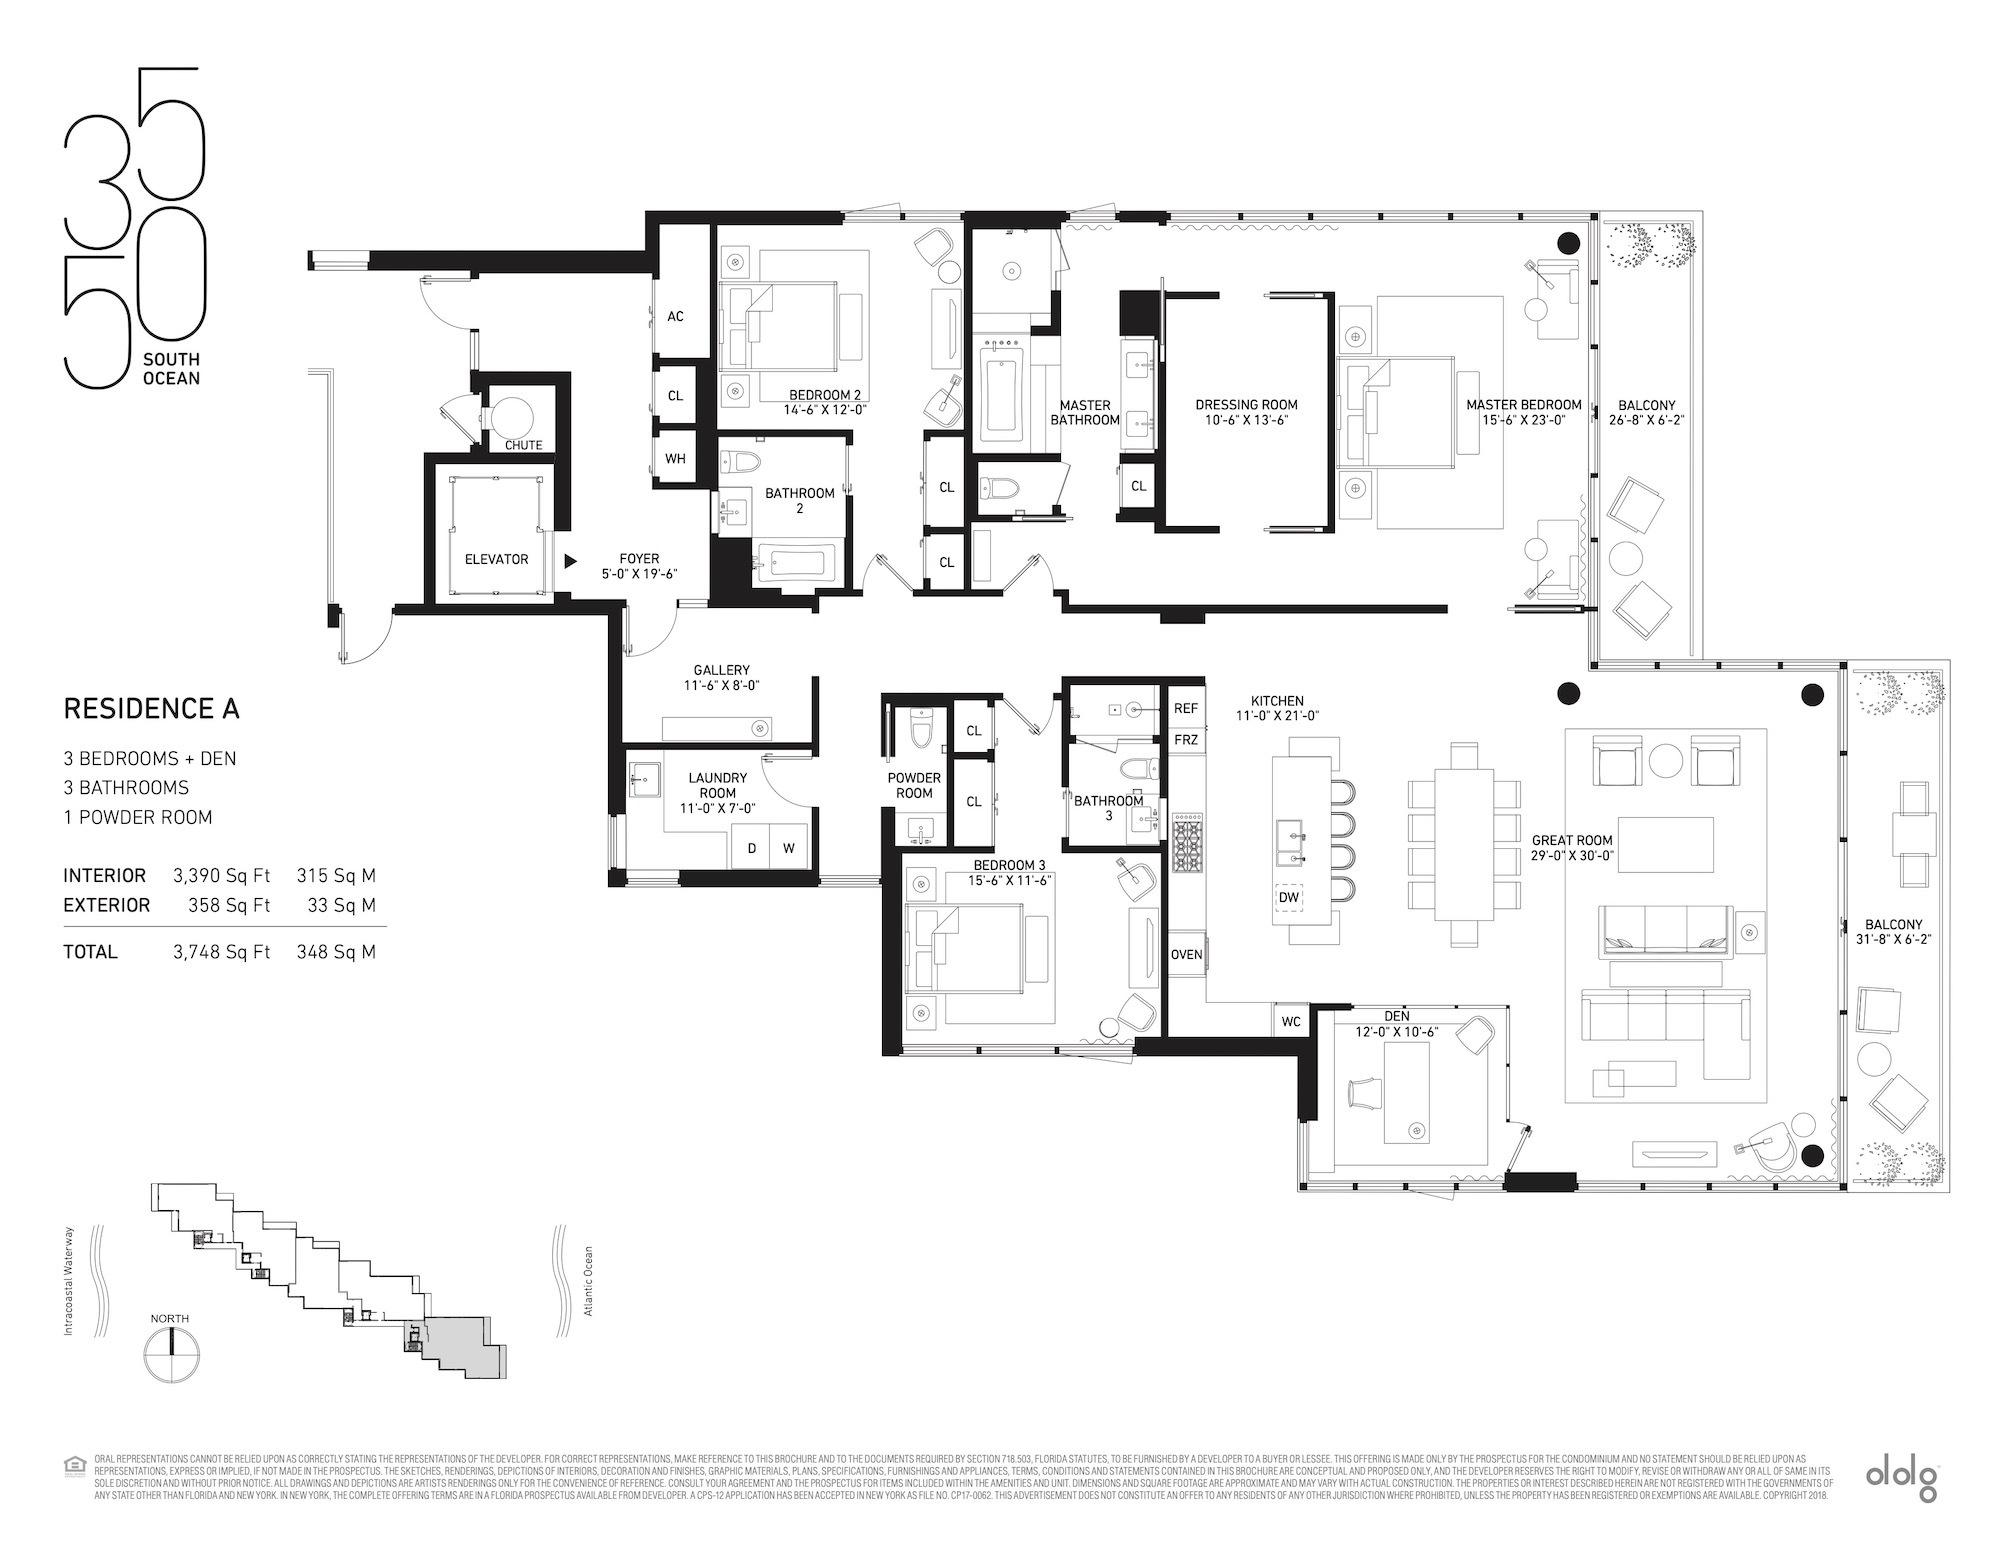 Floor Plan for 3550 South Ocean Floorplans, Residence A